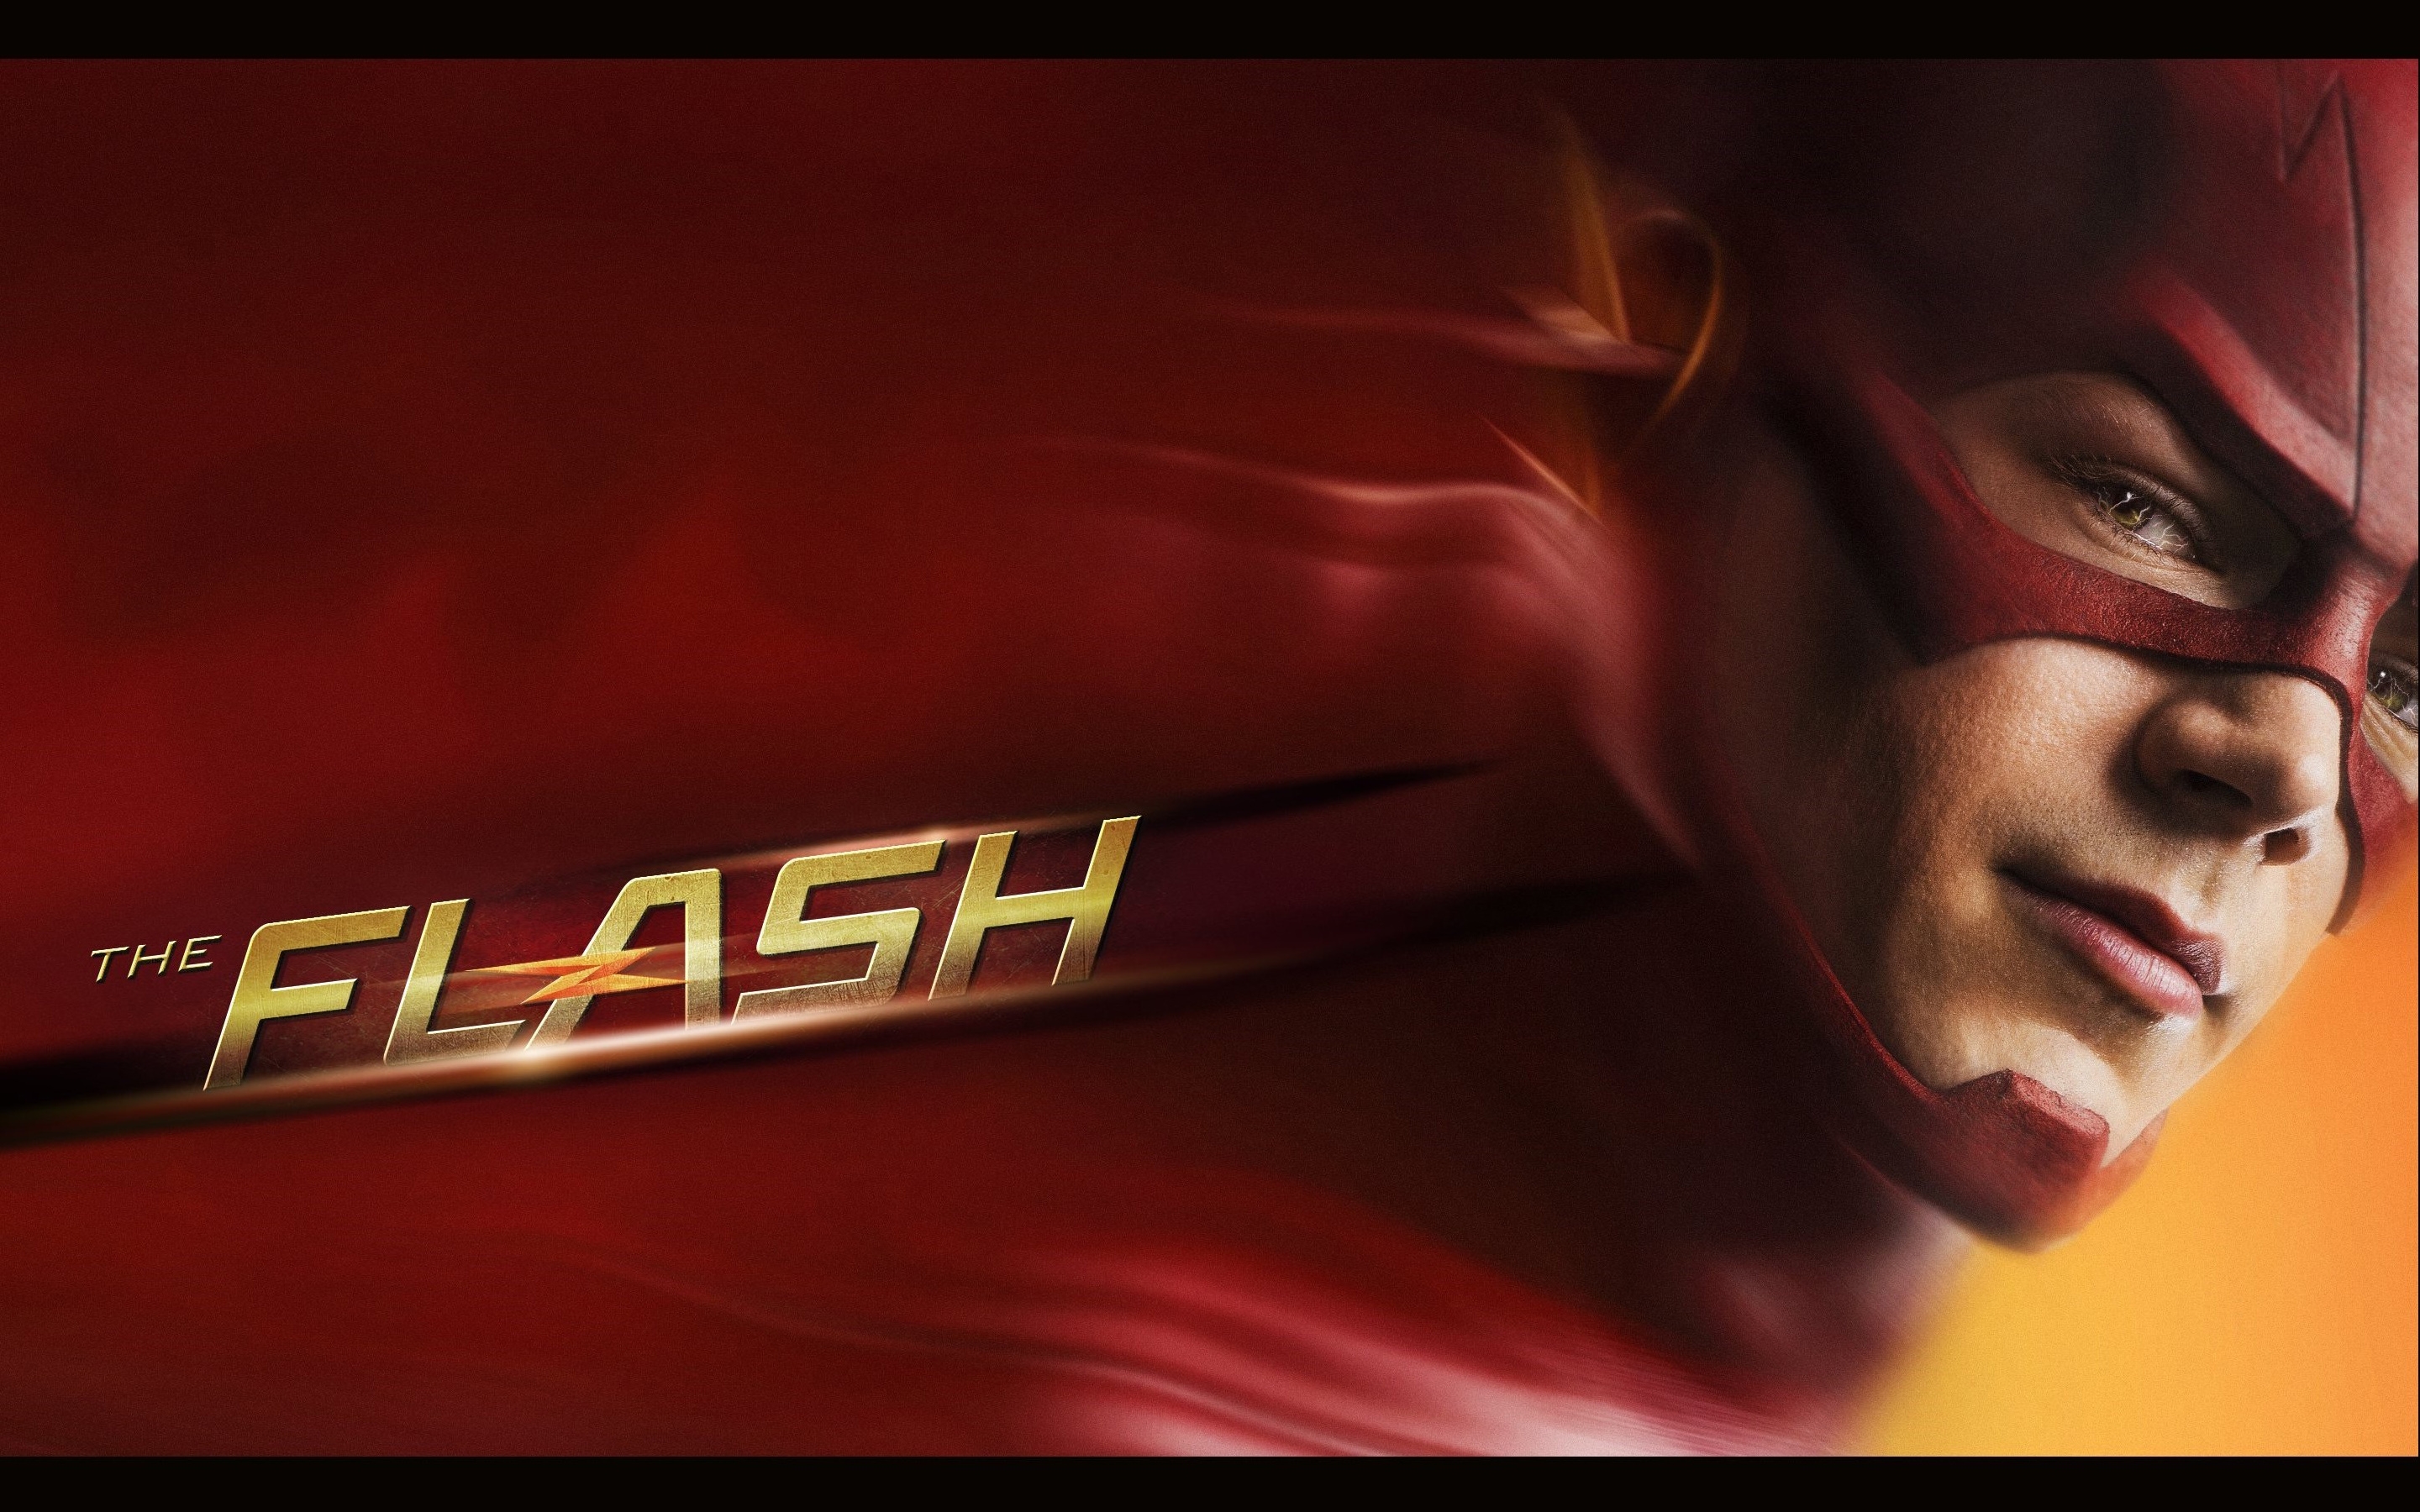 The Flash TV Series for 2880 x 1800 Retina Display resolution